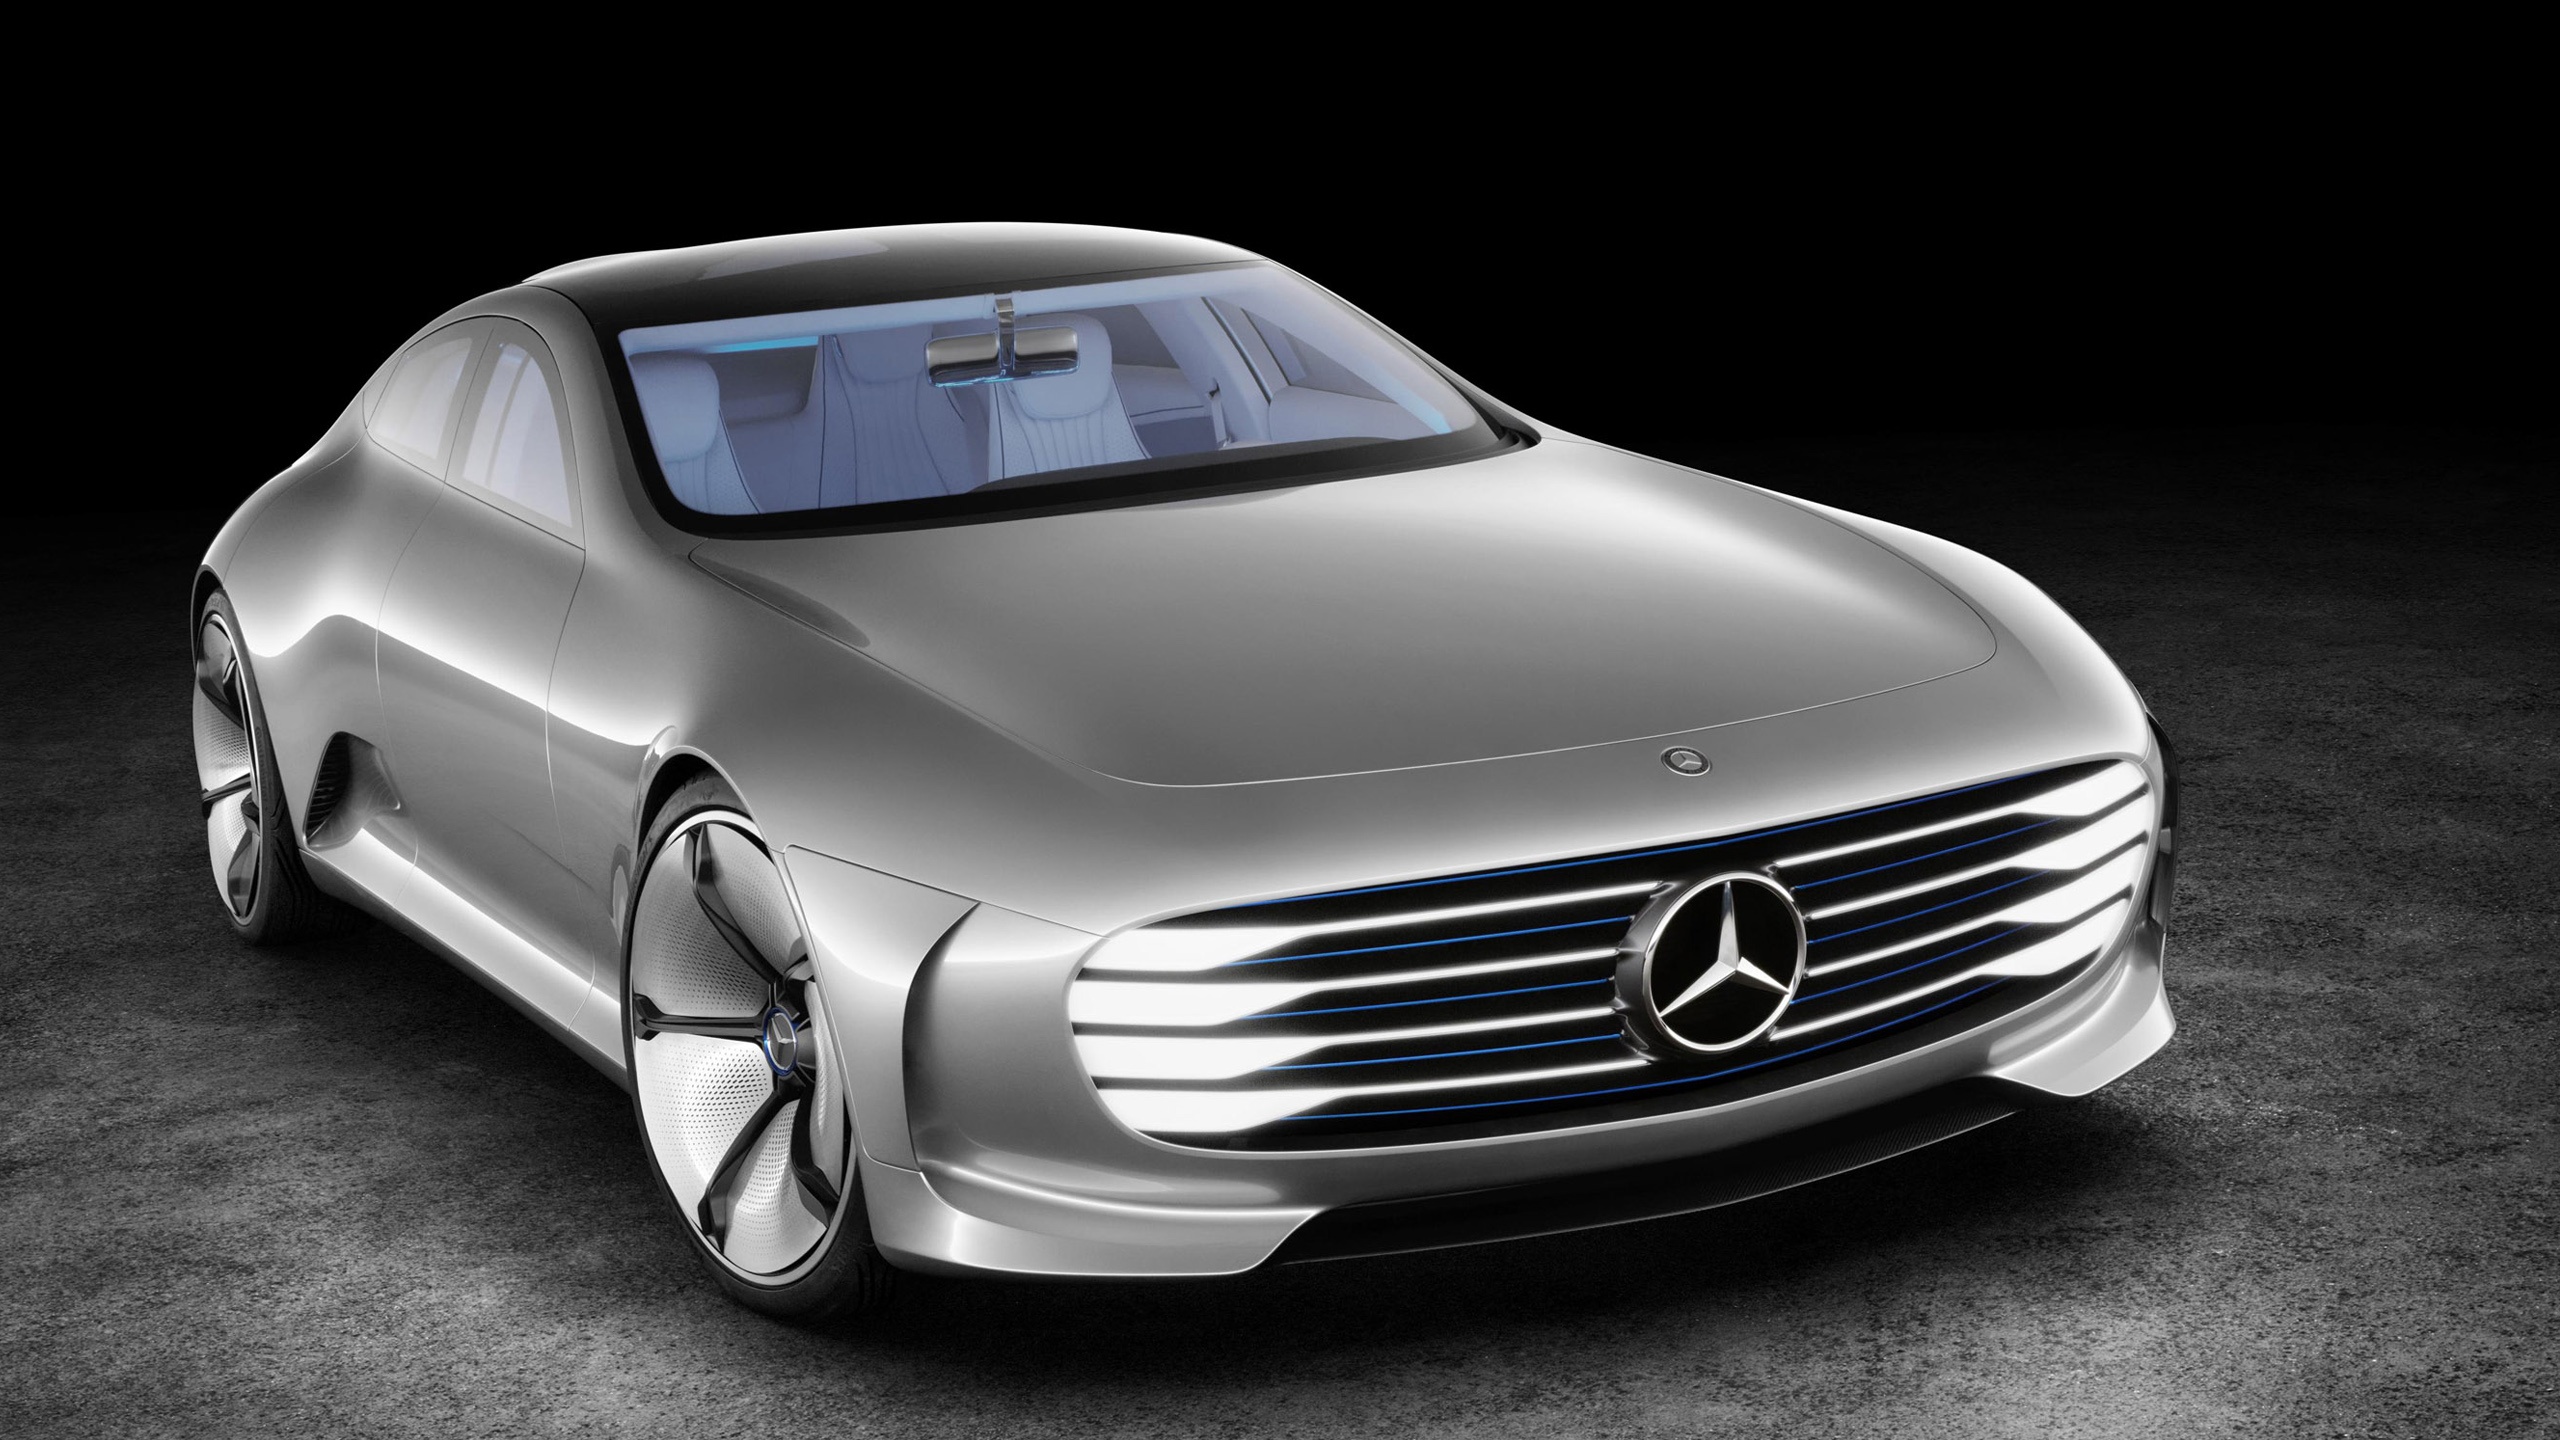 Mercedes Benz Silver Cars Prototype Concept Car 2560x1440